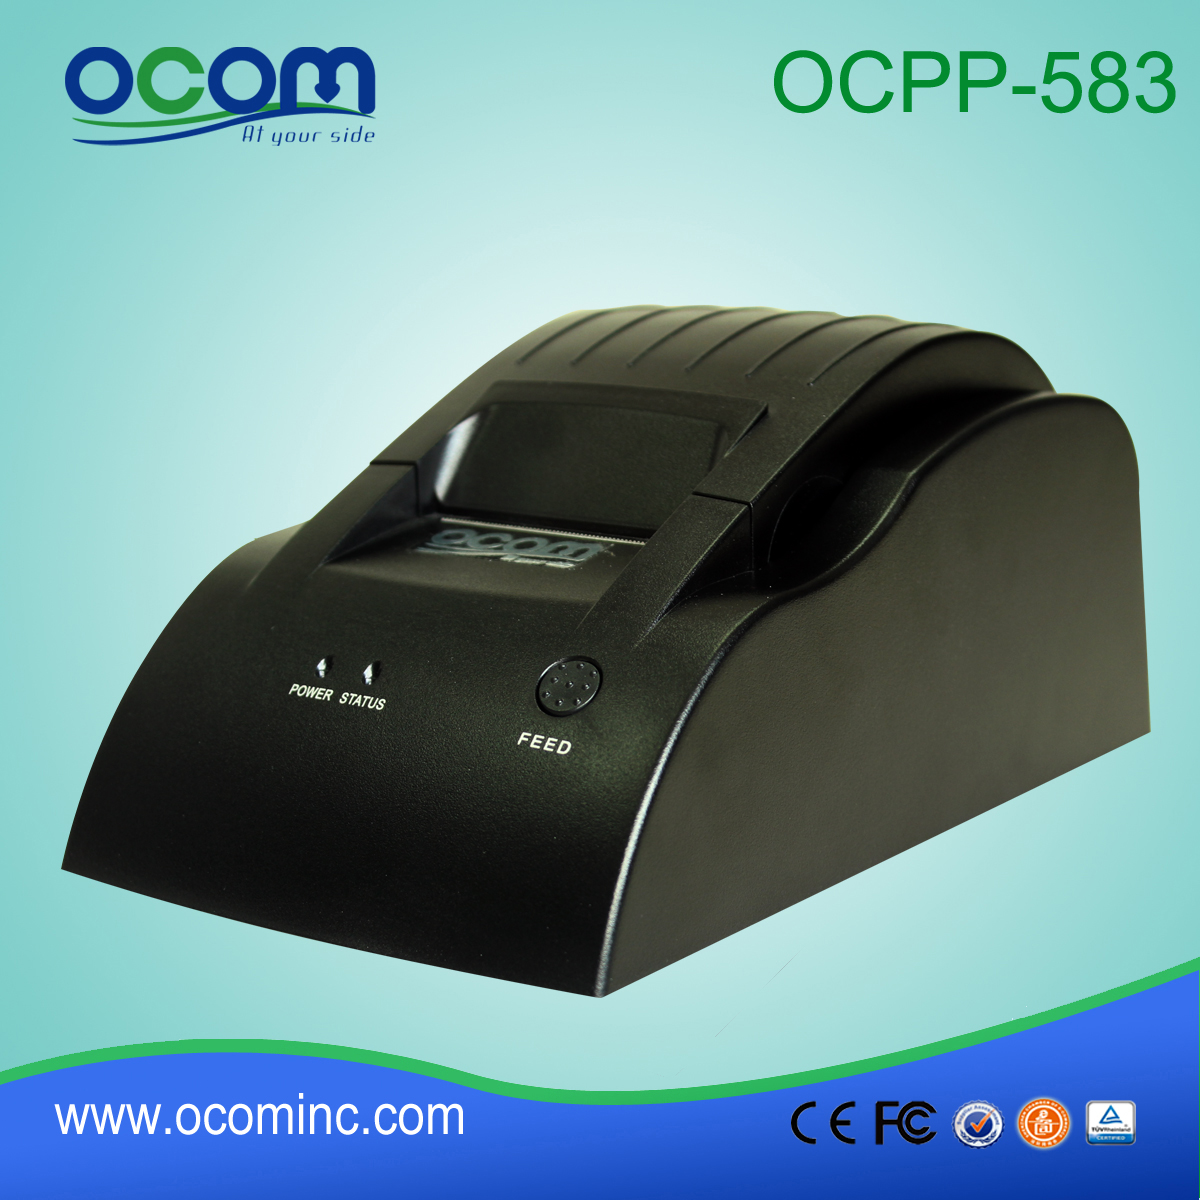 OCPP-583:2015 reliable supply 58mm thermal receipt printer, pos printer